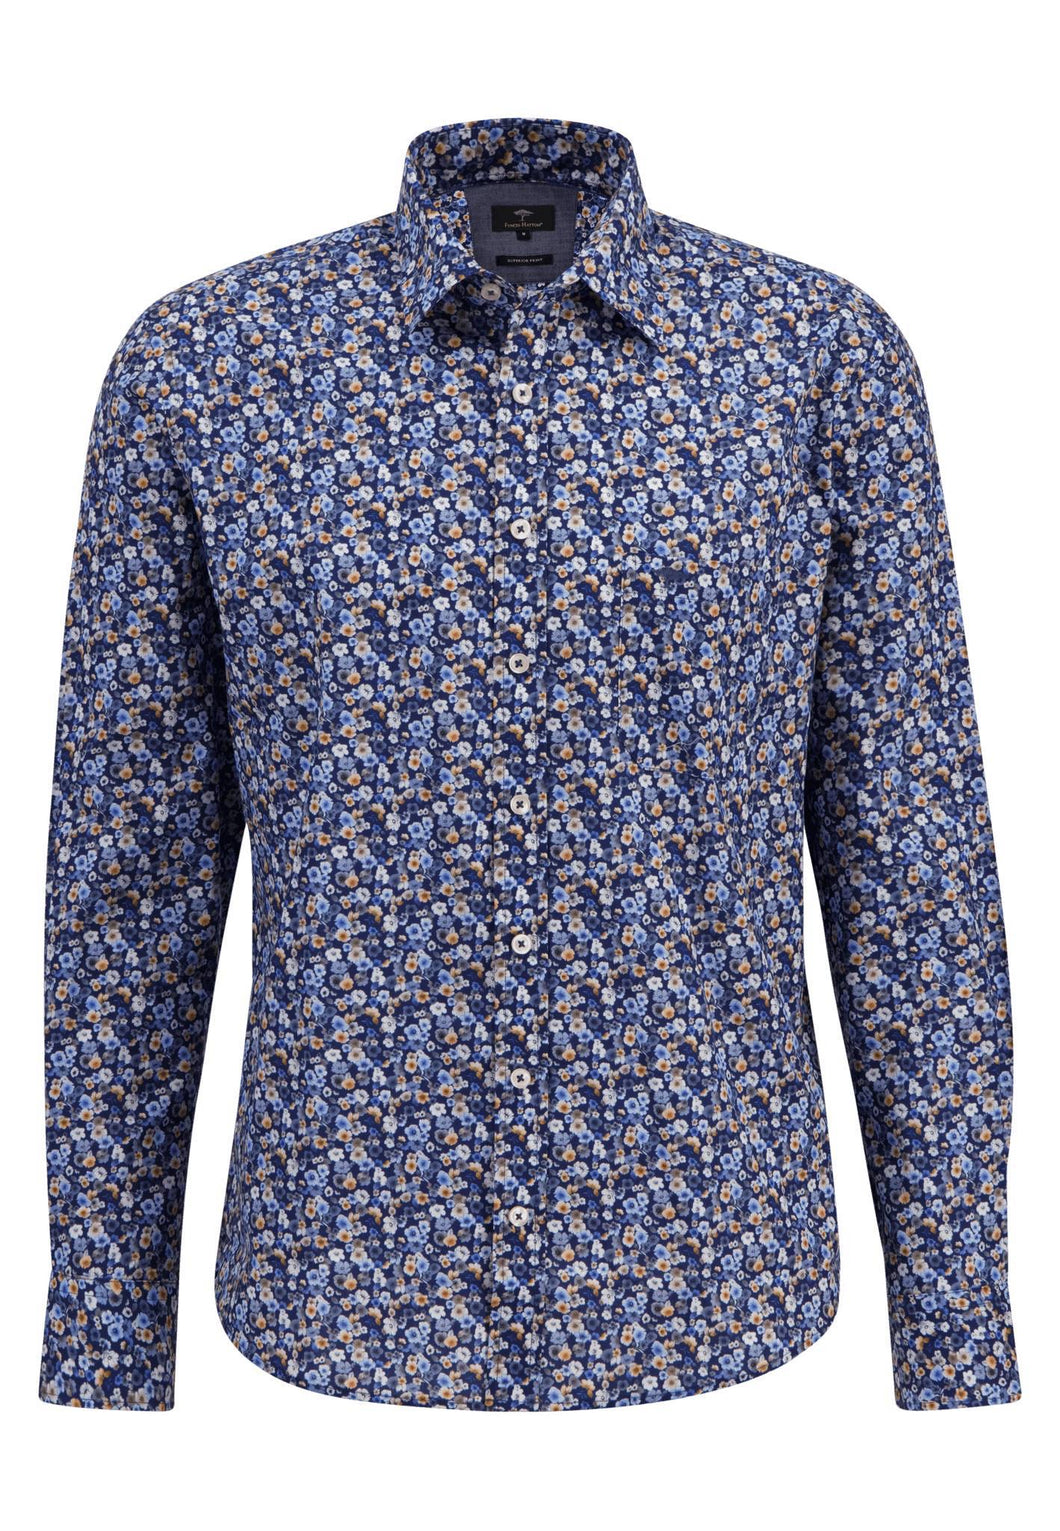 New Fynch Hatton Navy Flower Print Long Sleeve Shirt